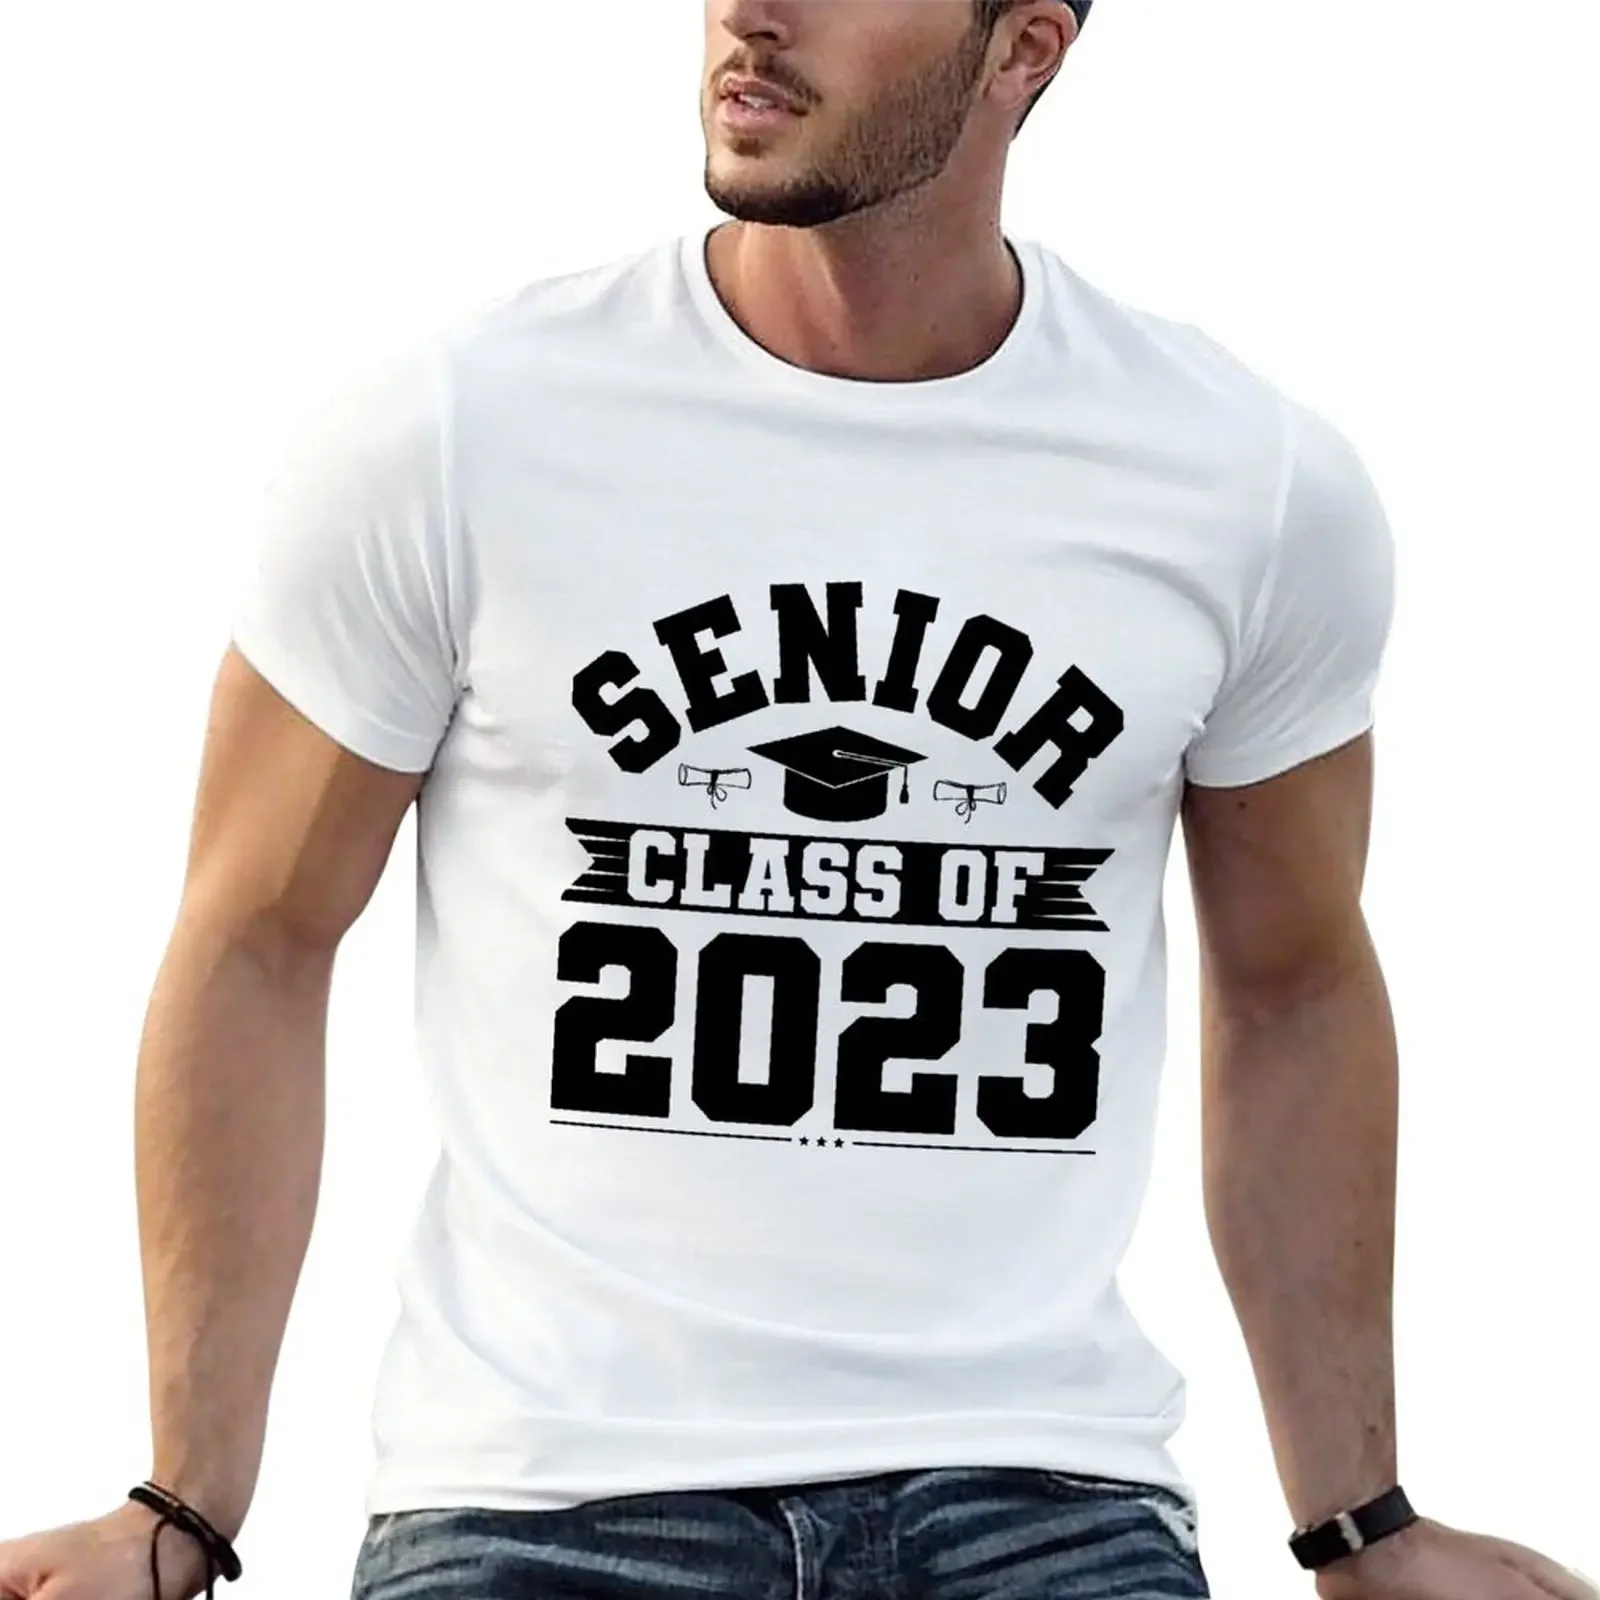 

Senior Class of 2023 - Graduation 2023 T-Shirt heavyweights plain mens graphic t-shirts funny